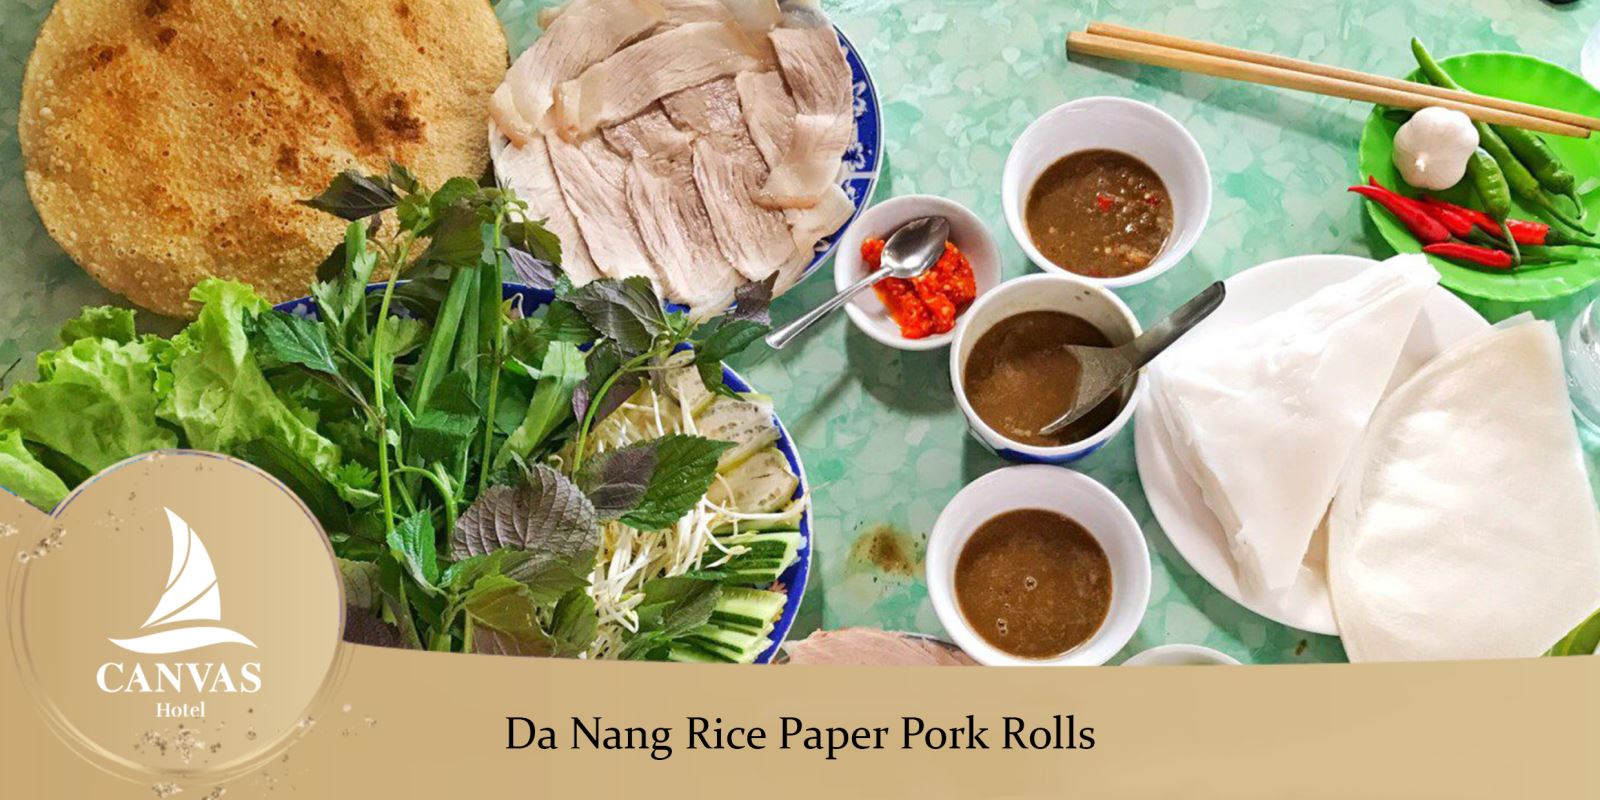 Da Nang Rice Paper Pork Rolls